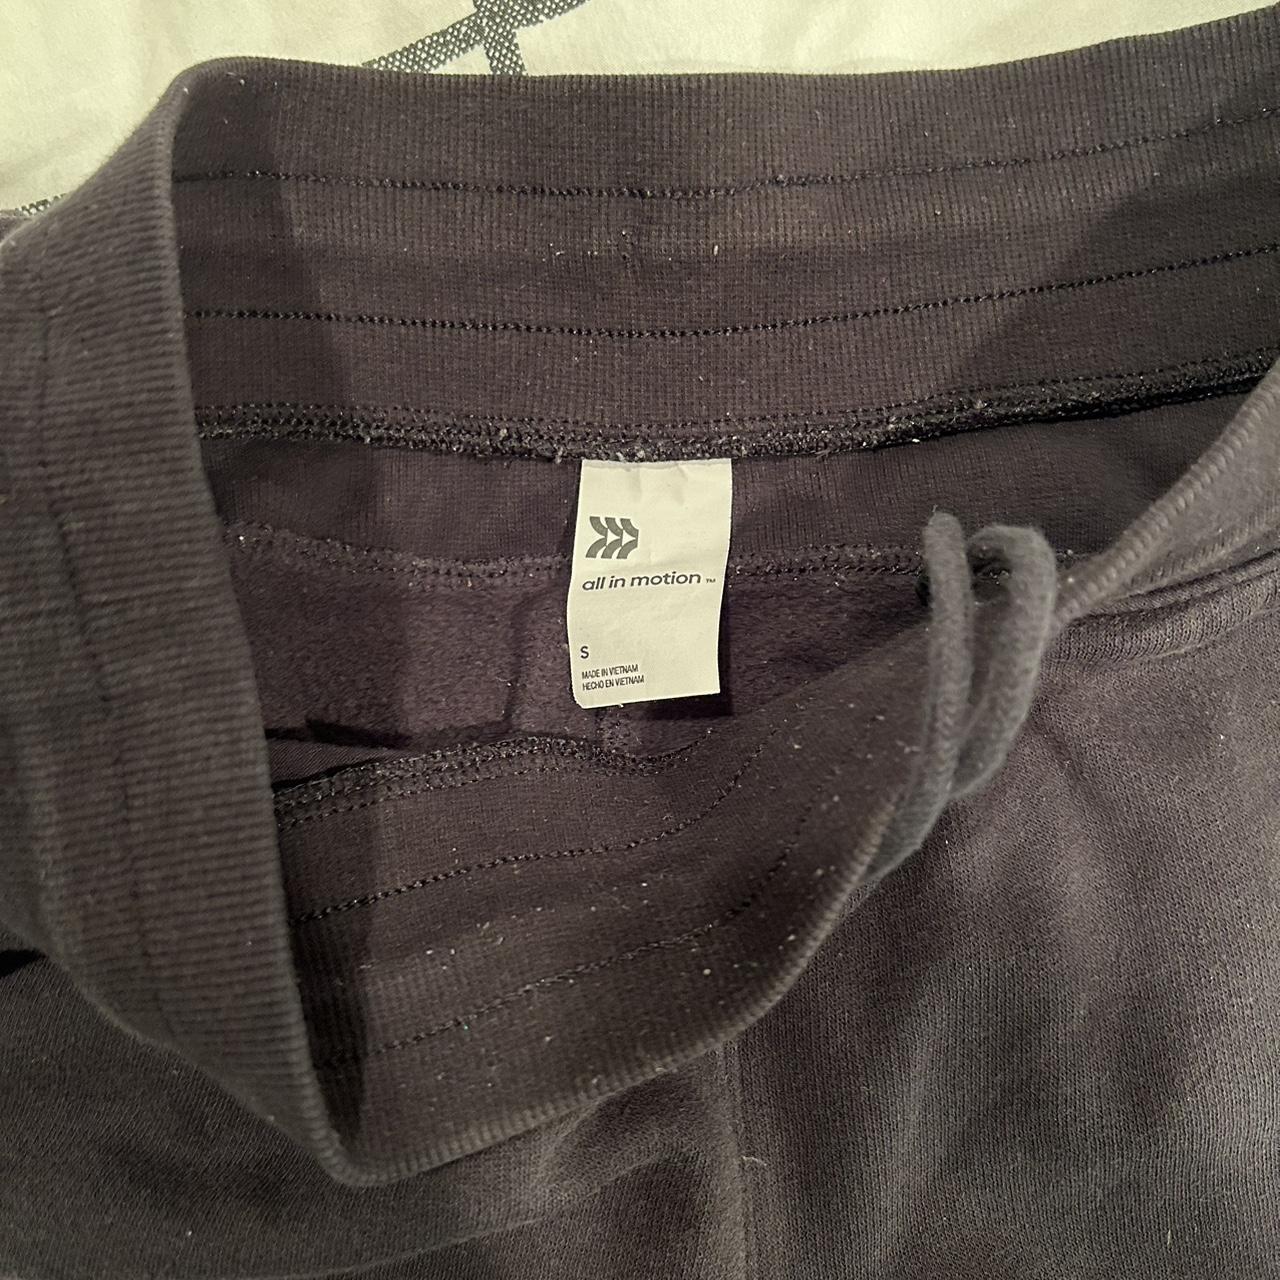 Target Sweatpants, size s, lightly worn, no